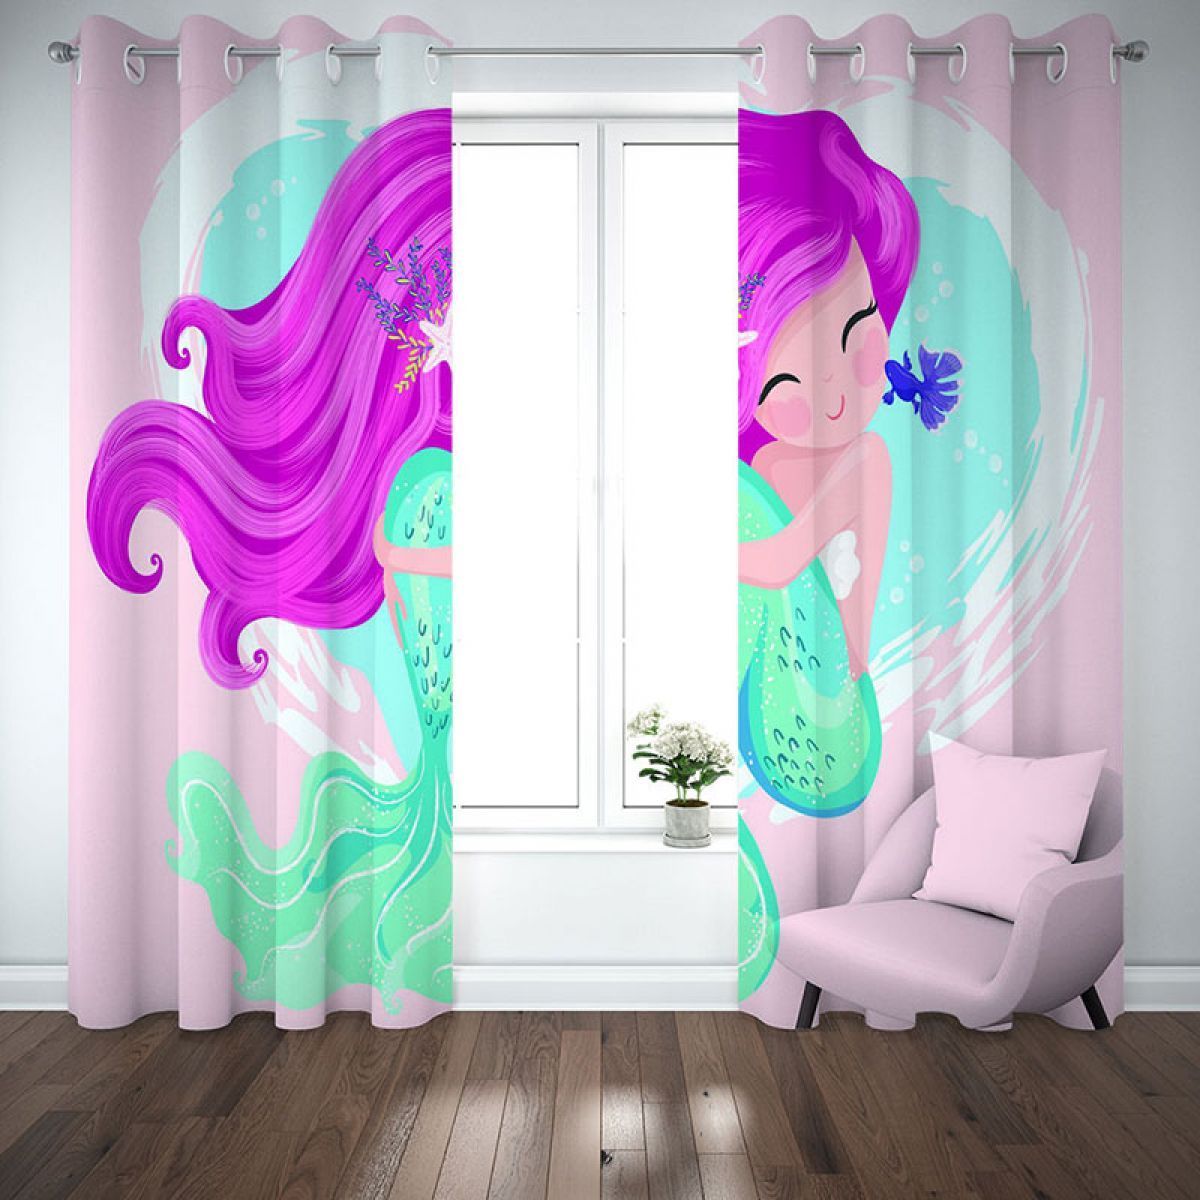 3d Mermaid With Goldfish Printed Window Curtain Home Decor